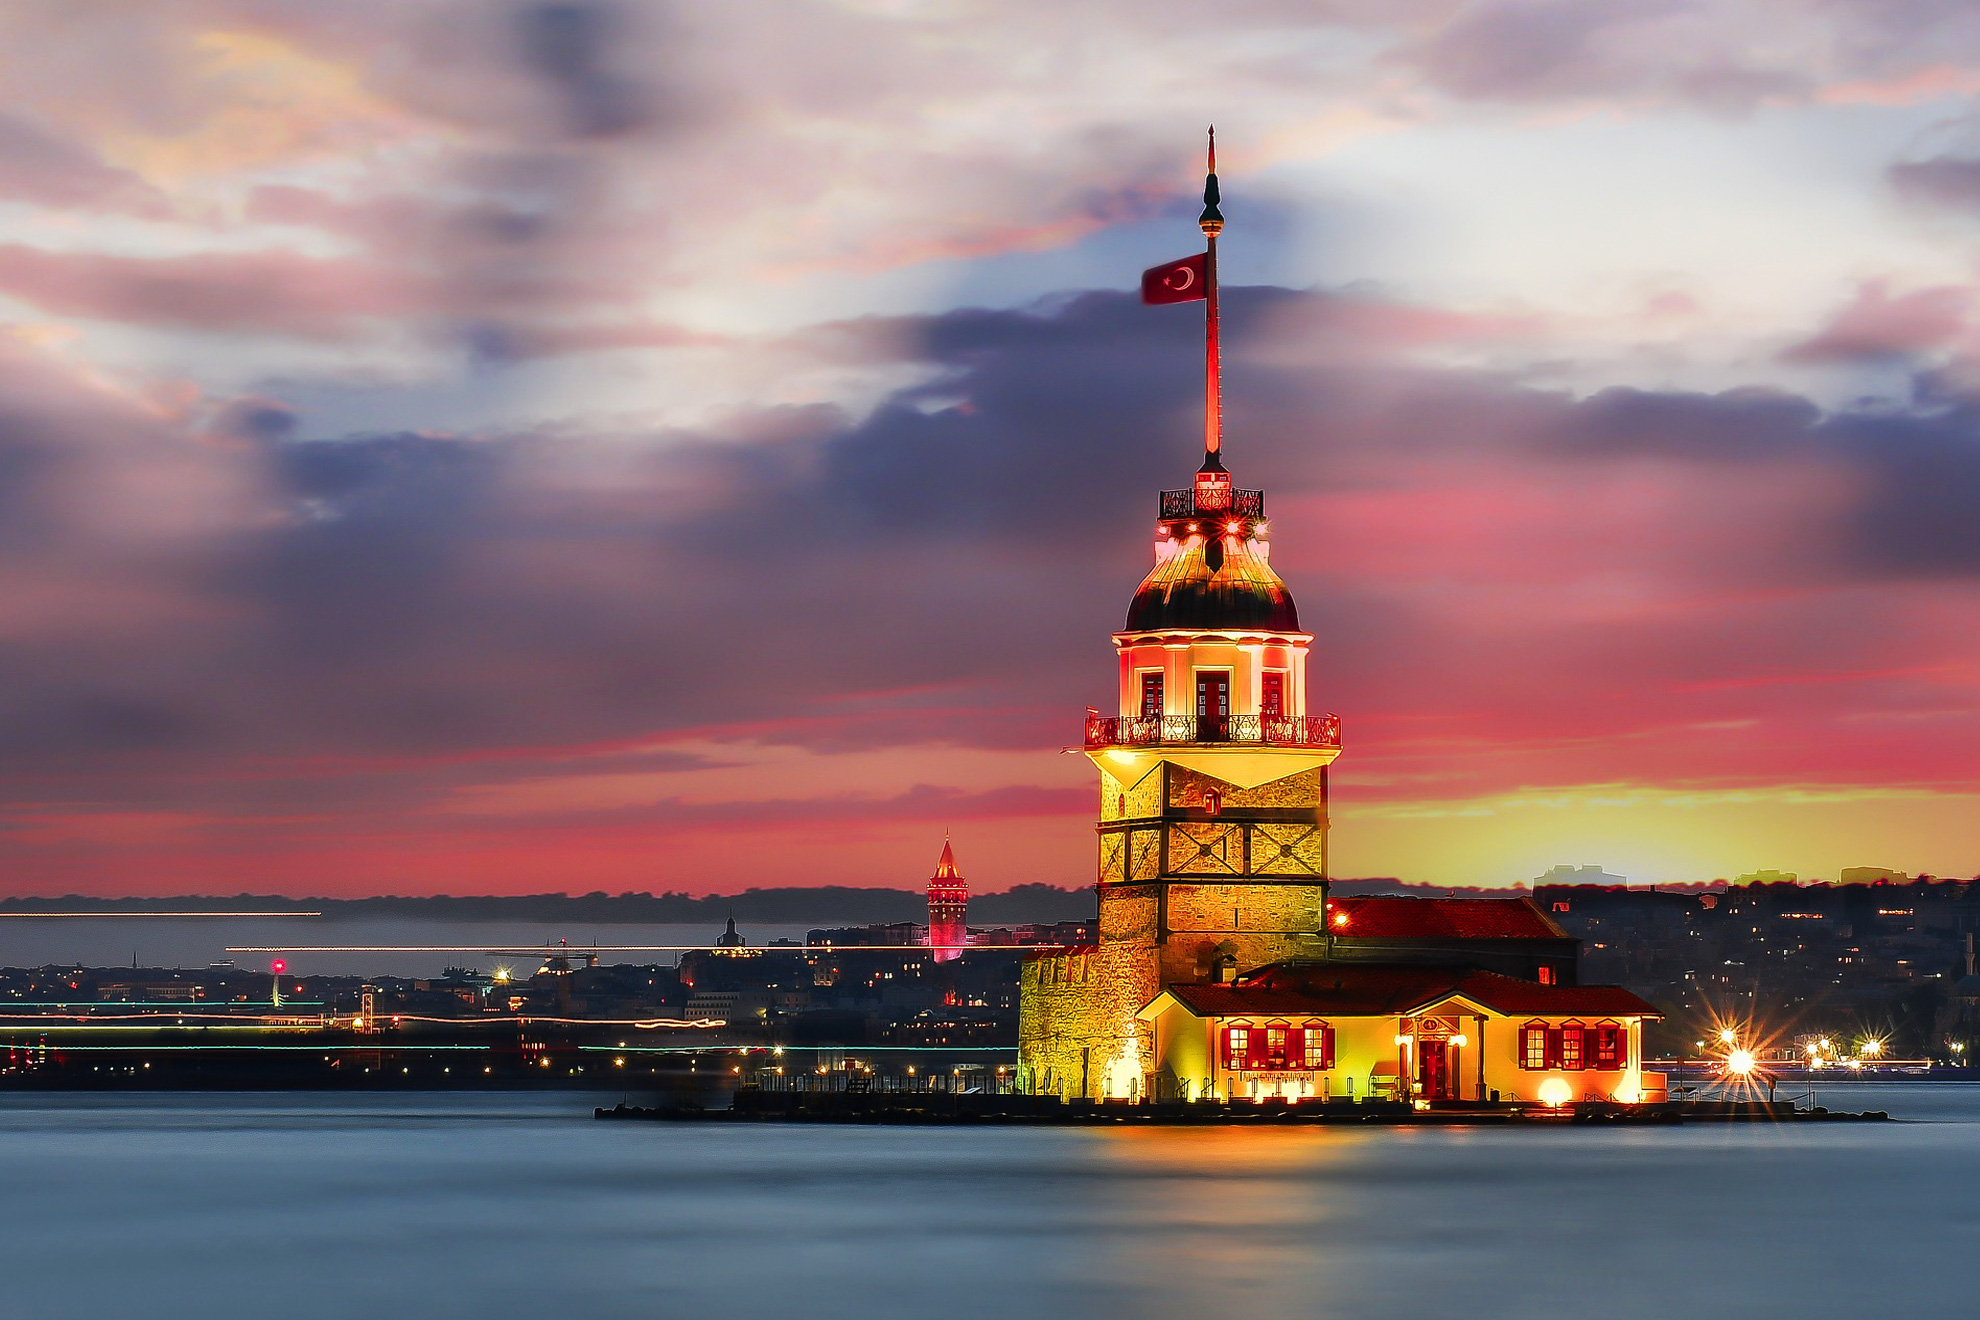  Истанбул - величието на една империя - Къз Кулеси (Момината кула), Босфора, Истанбул, Турция - Kız Kulesi (The Maiden's Tower or Leander's Tower), Bosphorus, Istanbul, Turkey